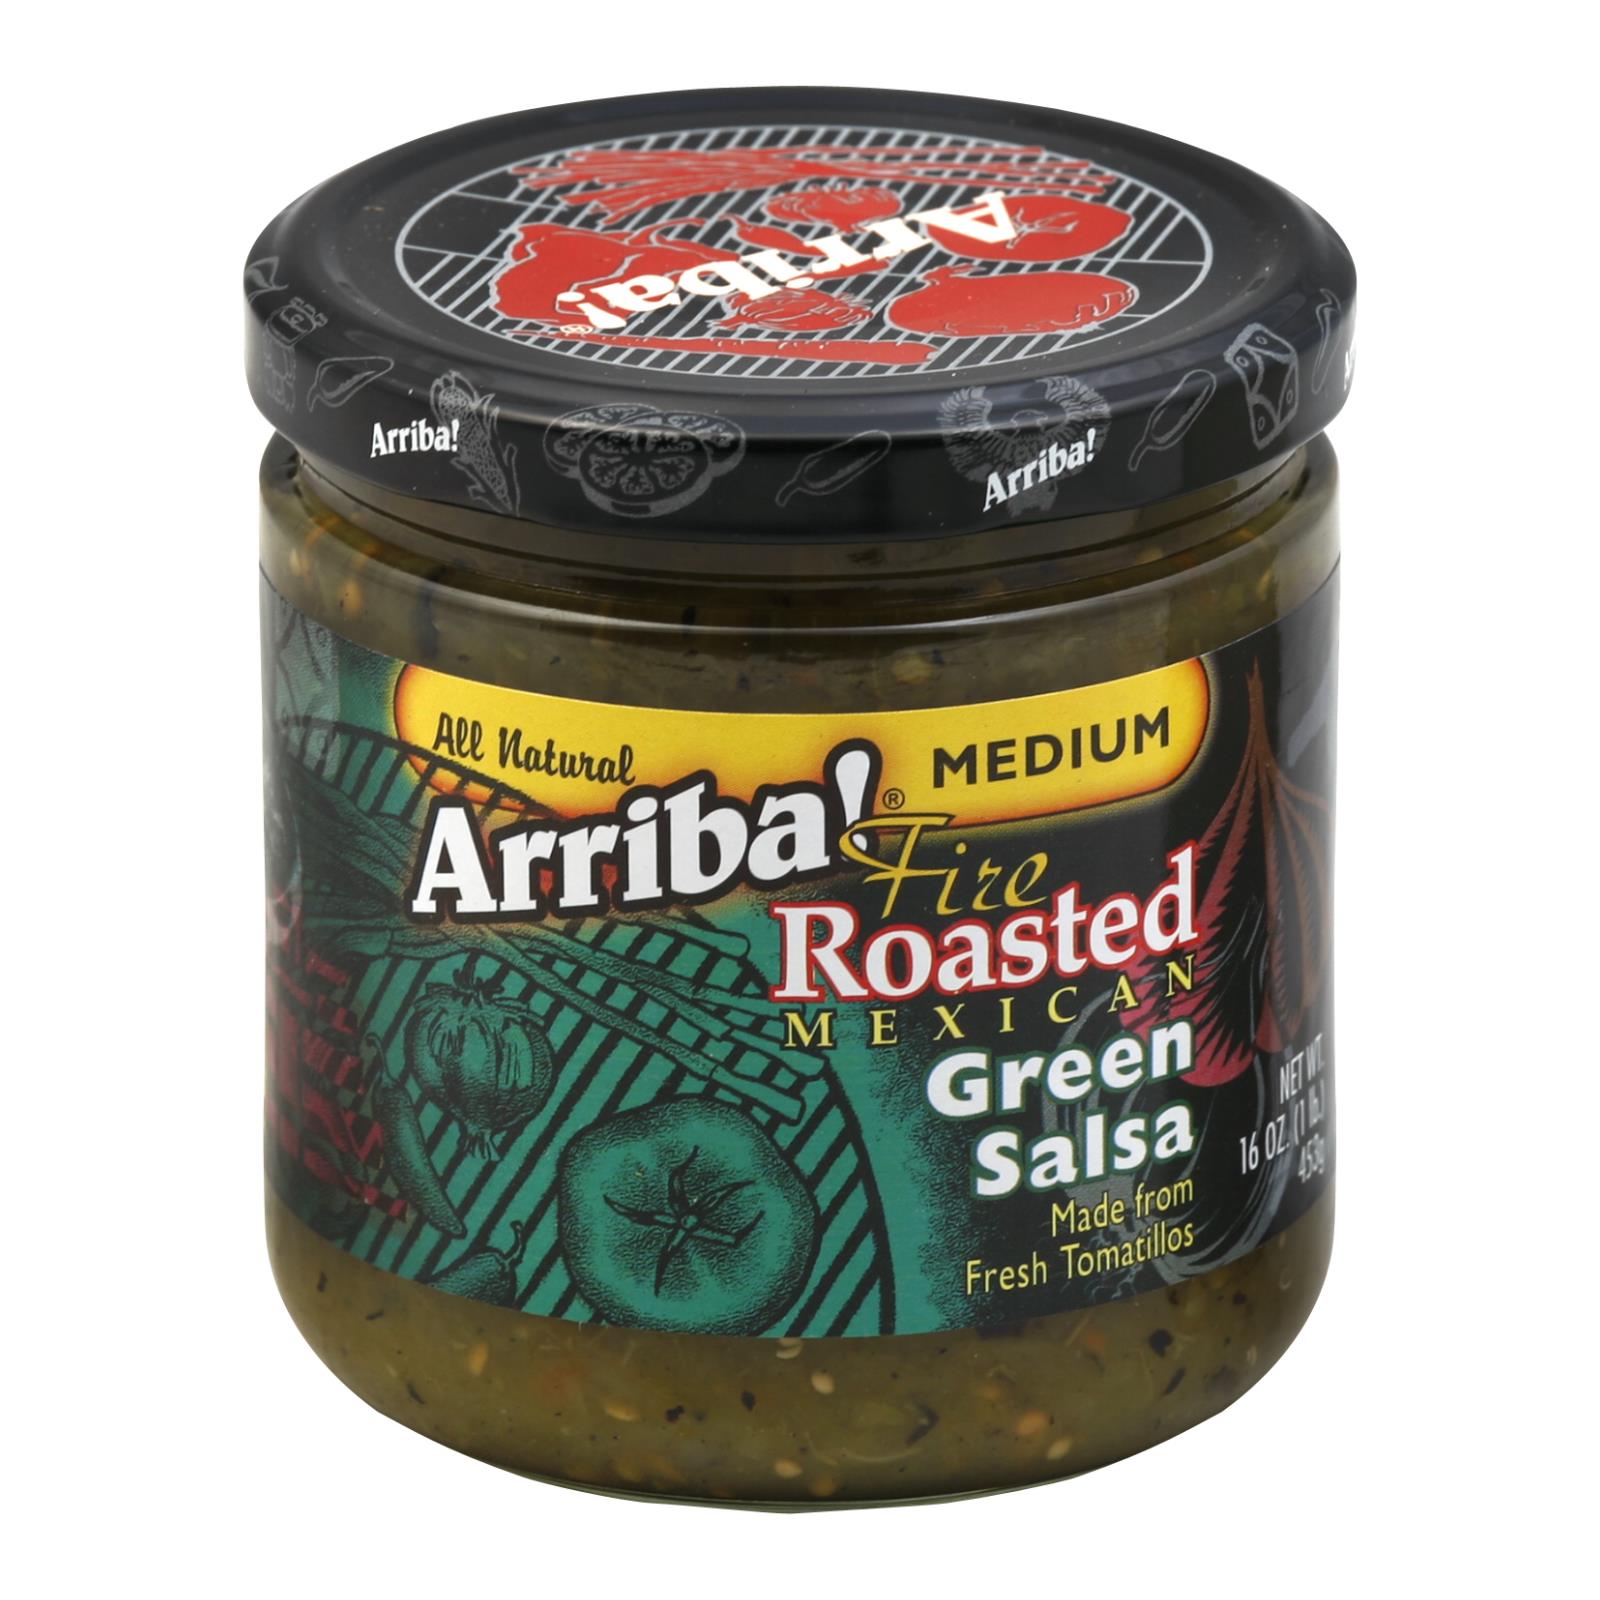 Arriba, Arriba Roasted Green Salsa - Medium - Case of 6 - 16 oz. (Pack of 6)